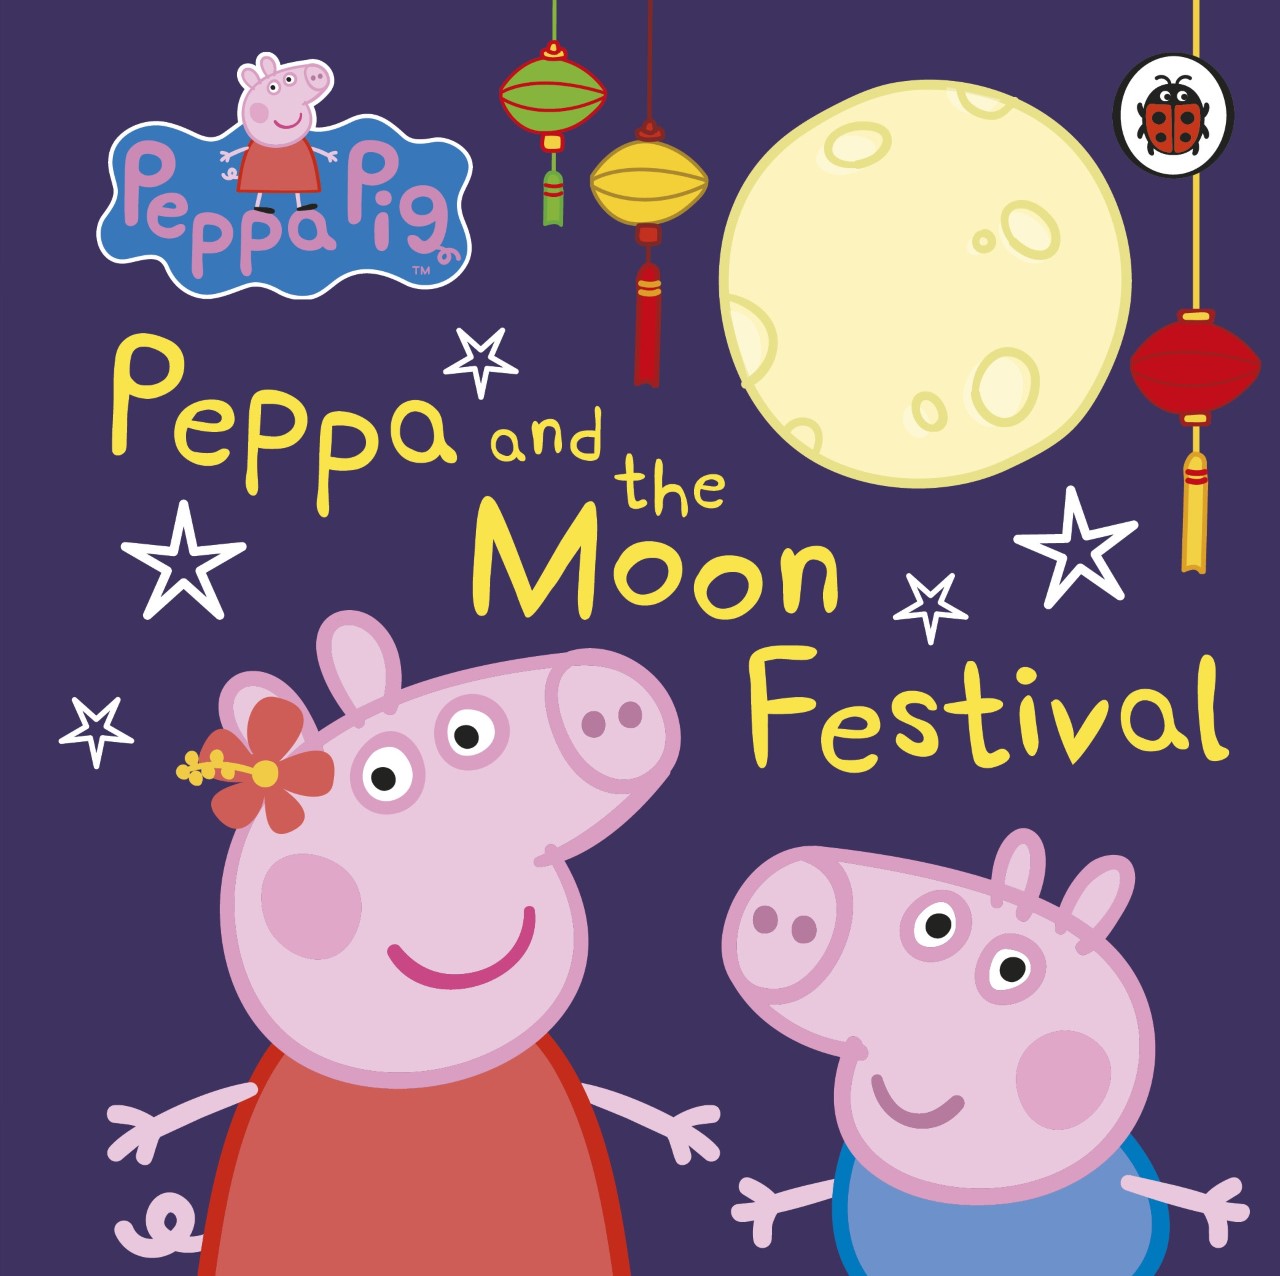 Hong Kong book shop Peppa Pig: Peppa and the Moon Festival (Publication date: September 20, 2020)